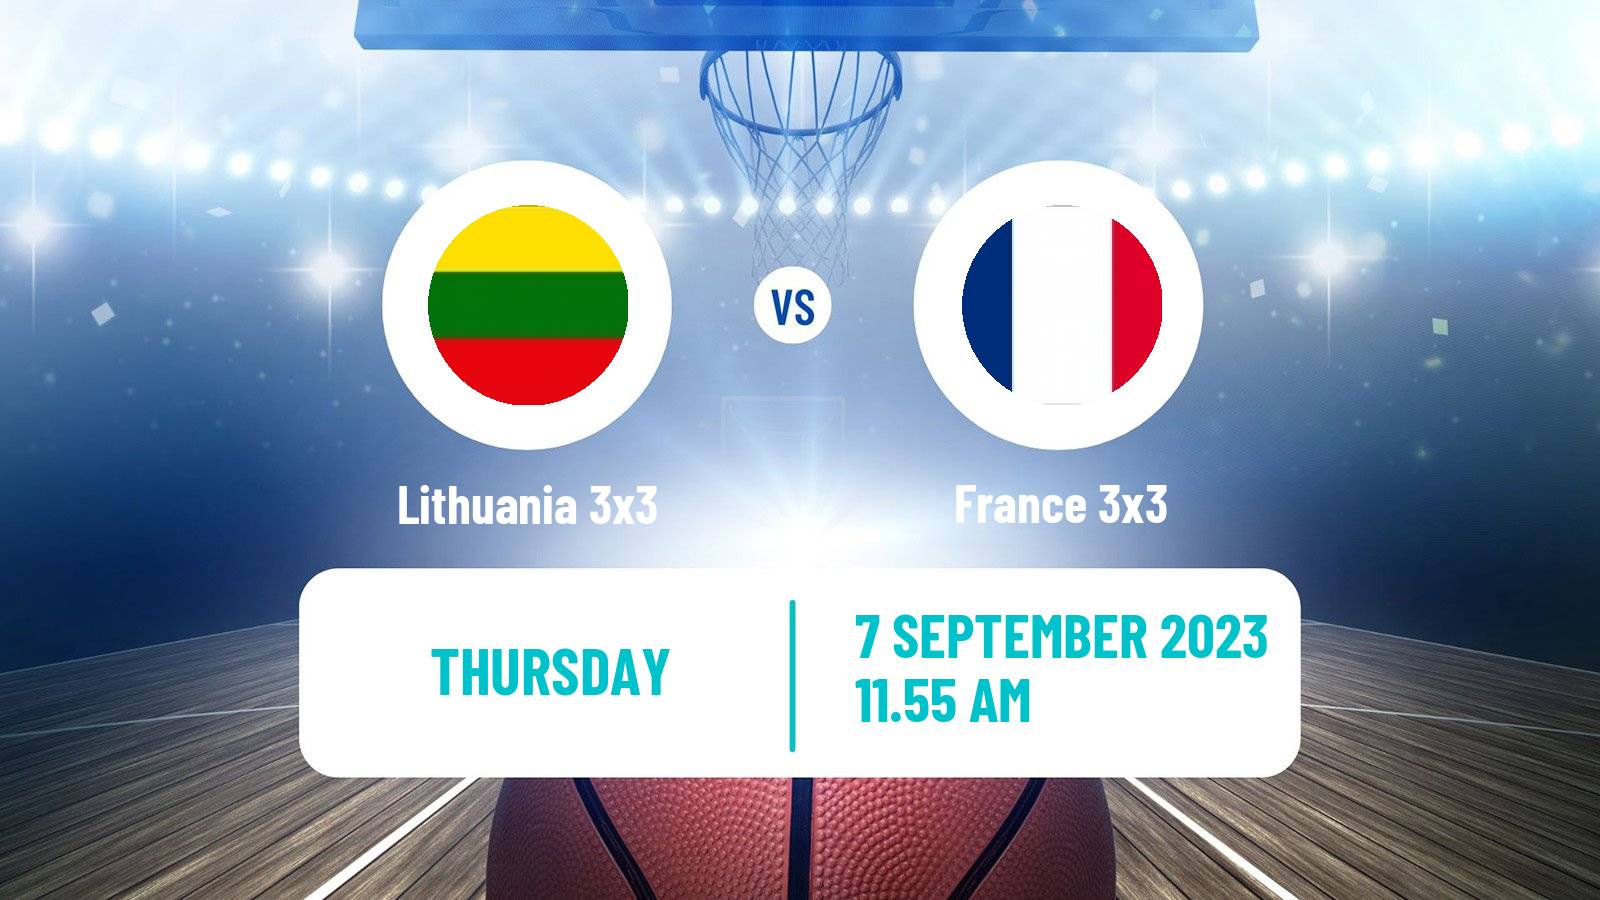 Basketball Europe Cup Basketball 3x3 Lithuania 3x3 - France 3x3